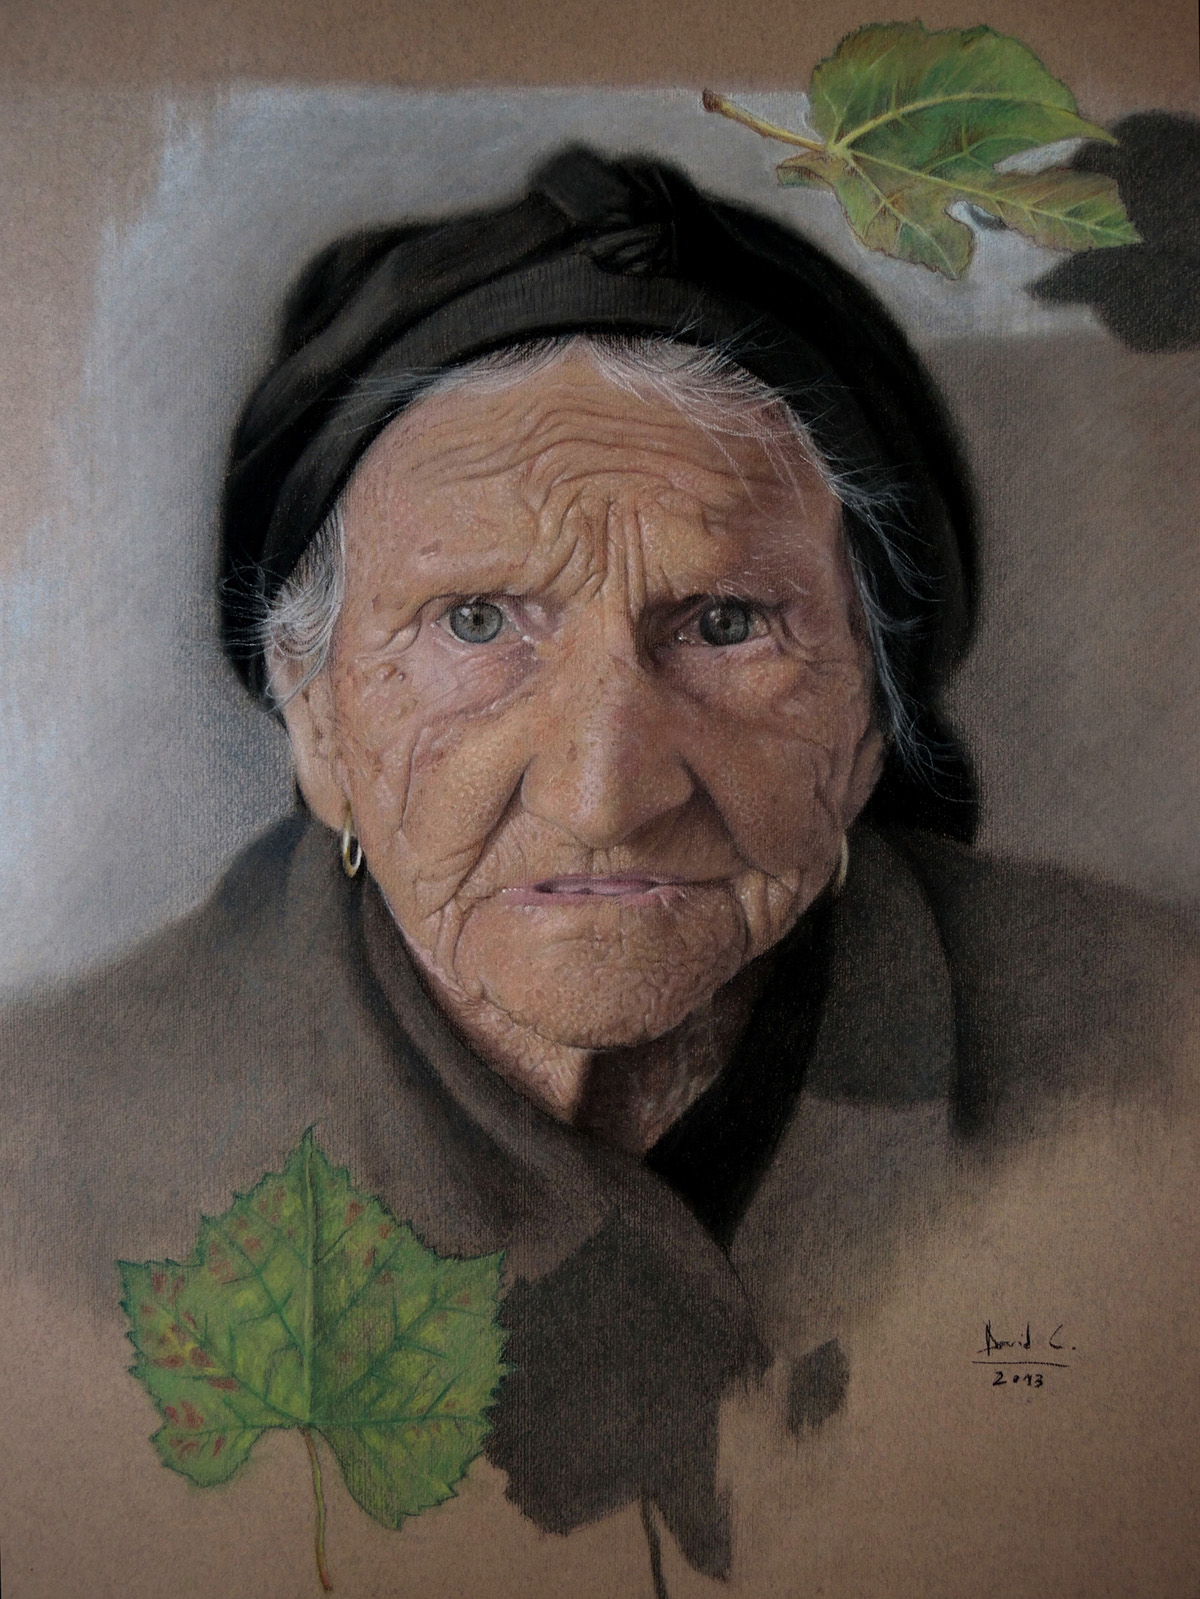 Pencil drawing color pencil  pastel pencil  pastel  portrait  elder  old woman  grandmother  realism  hyperrealism  mary  david c.  David  light  foot